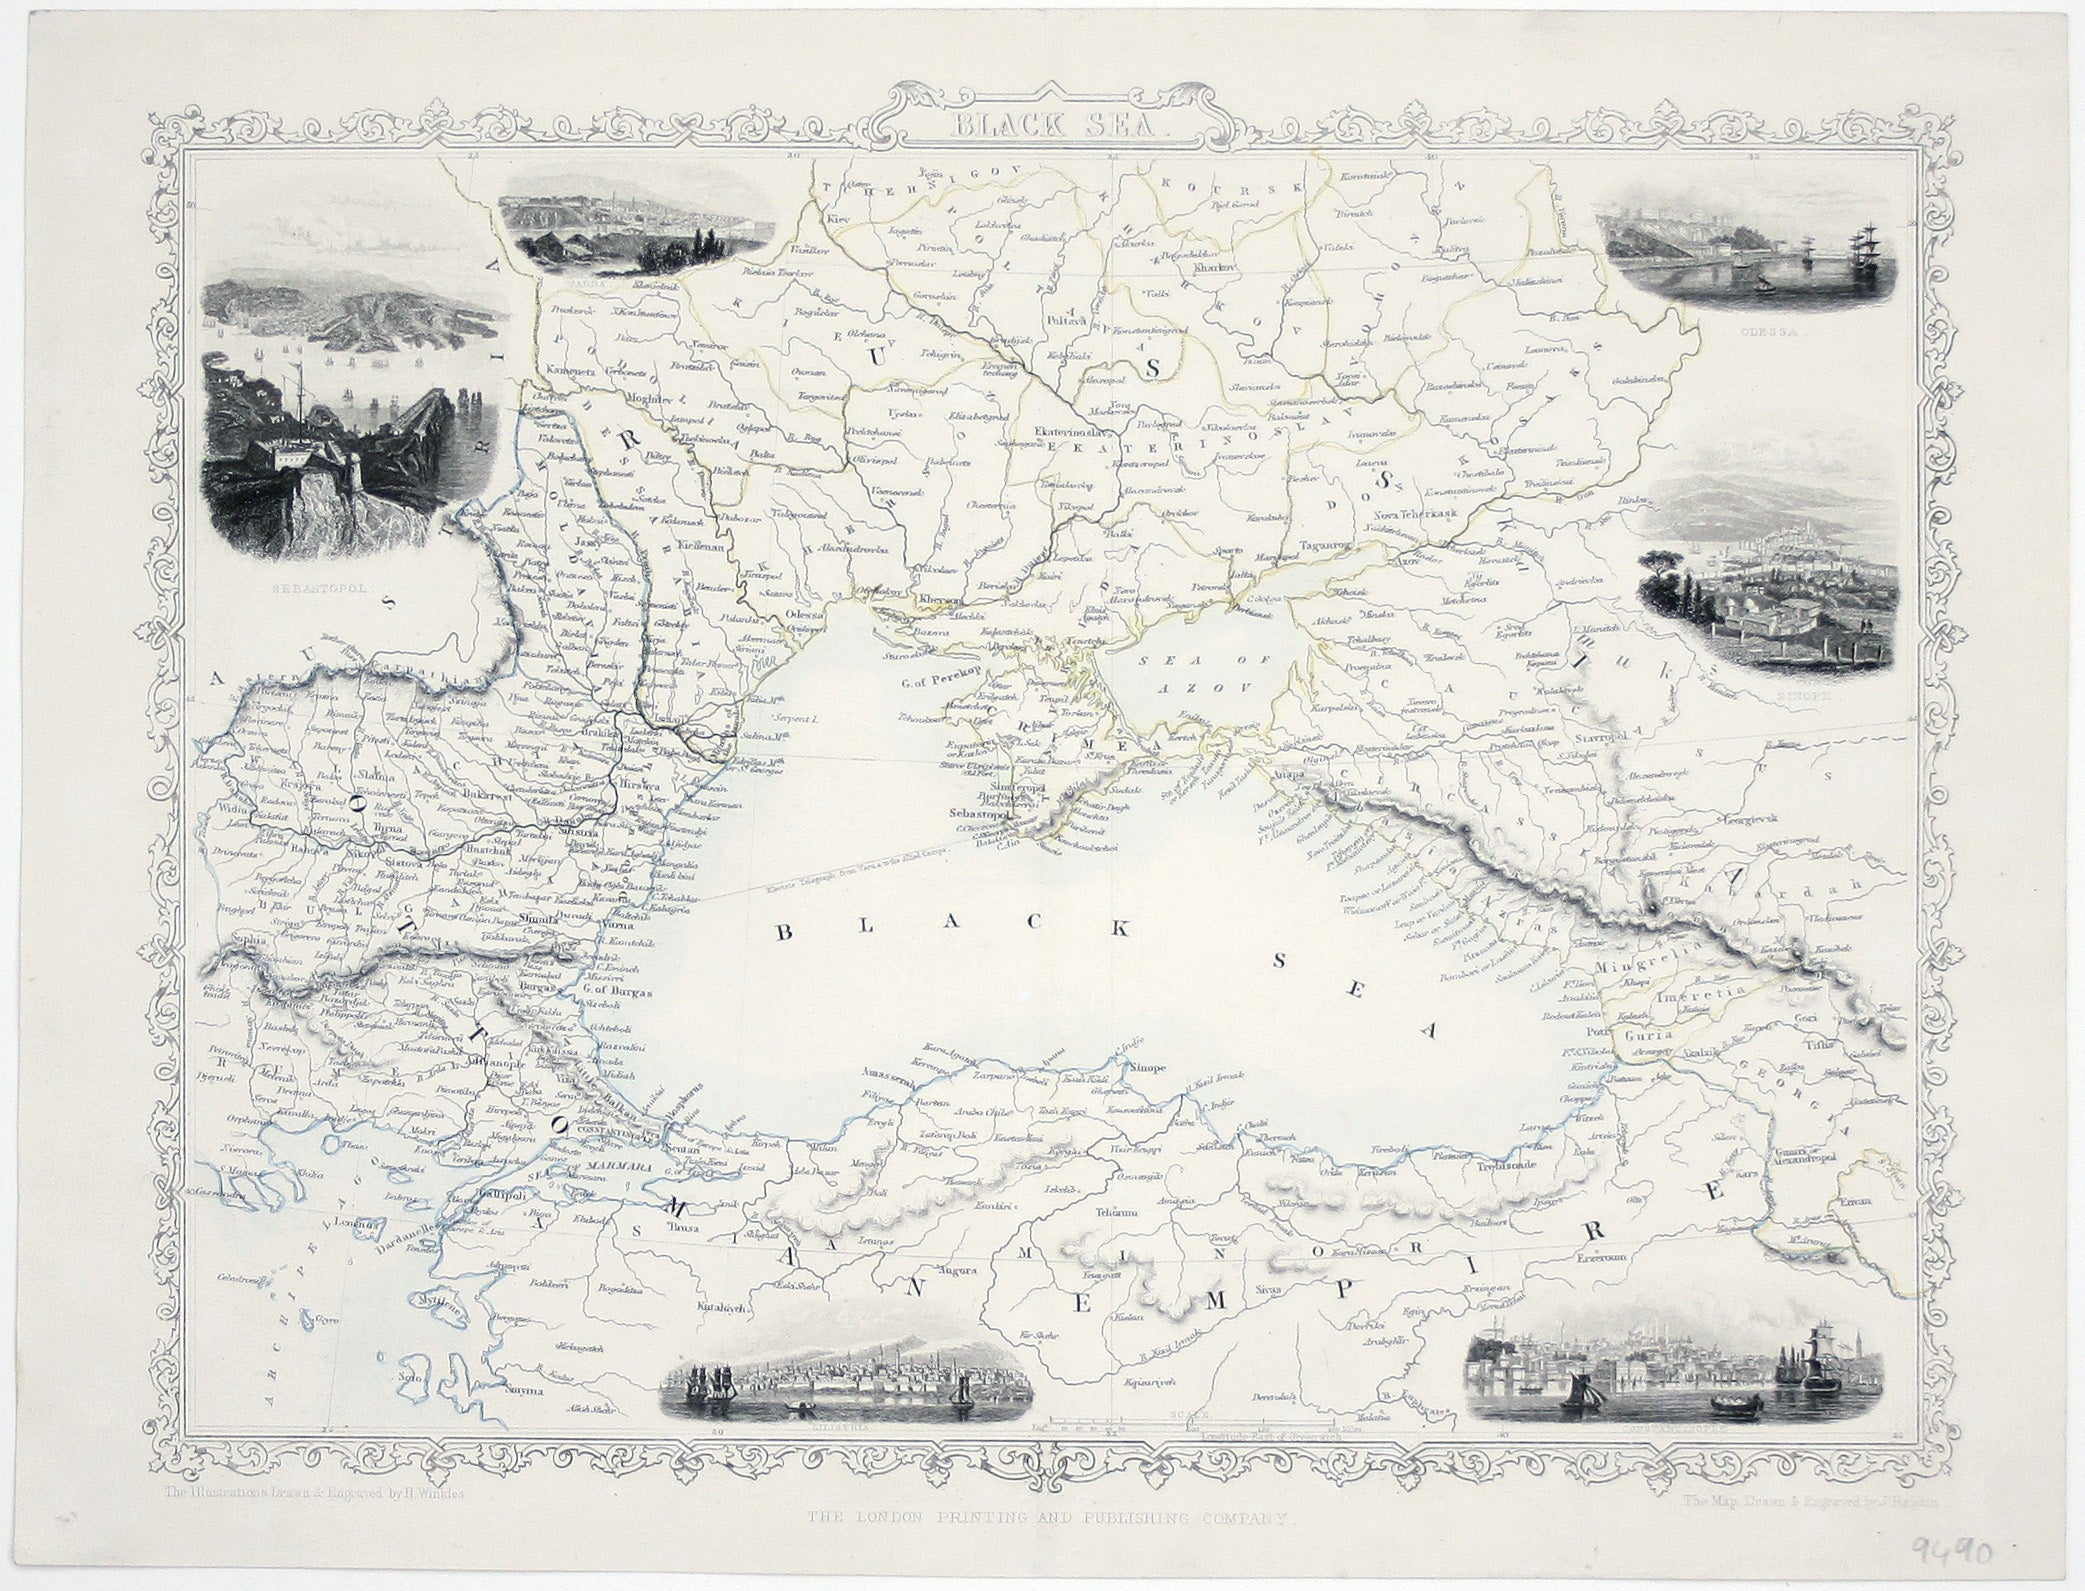 Tallis’ Map of the Black Sea